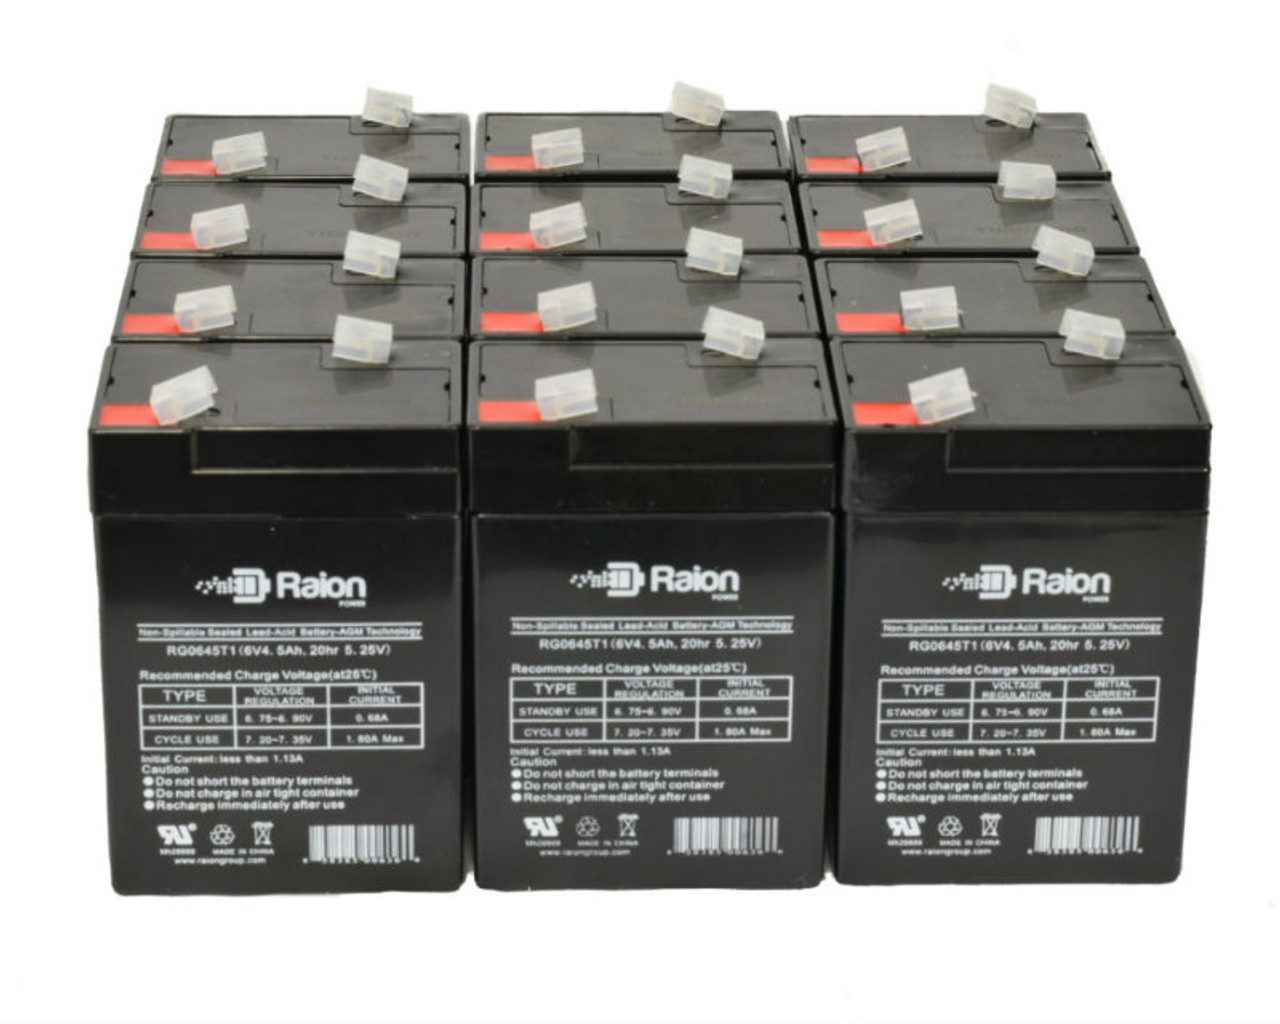 Raion Power 6V 4.5Ah Replacement Emergency Light Battery for Hi-Light 39103M - 12 Pack